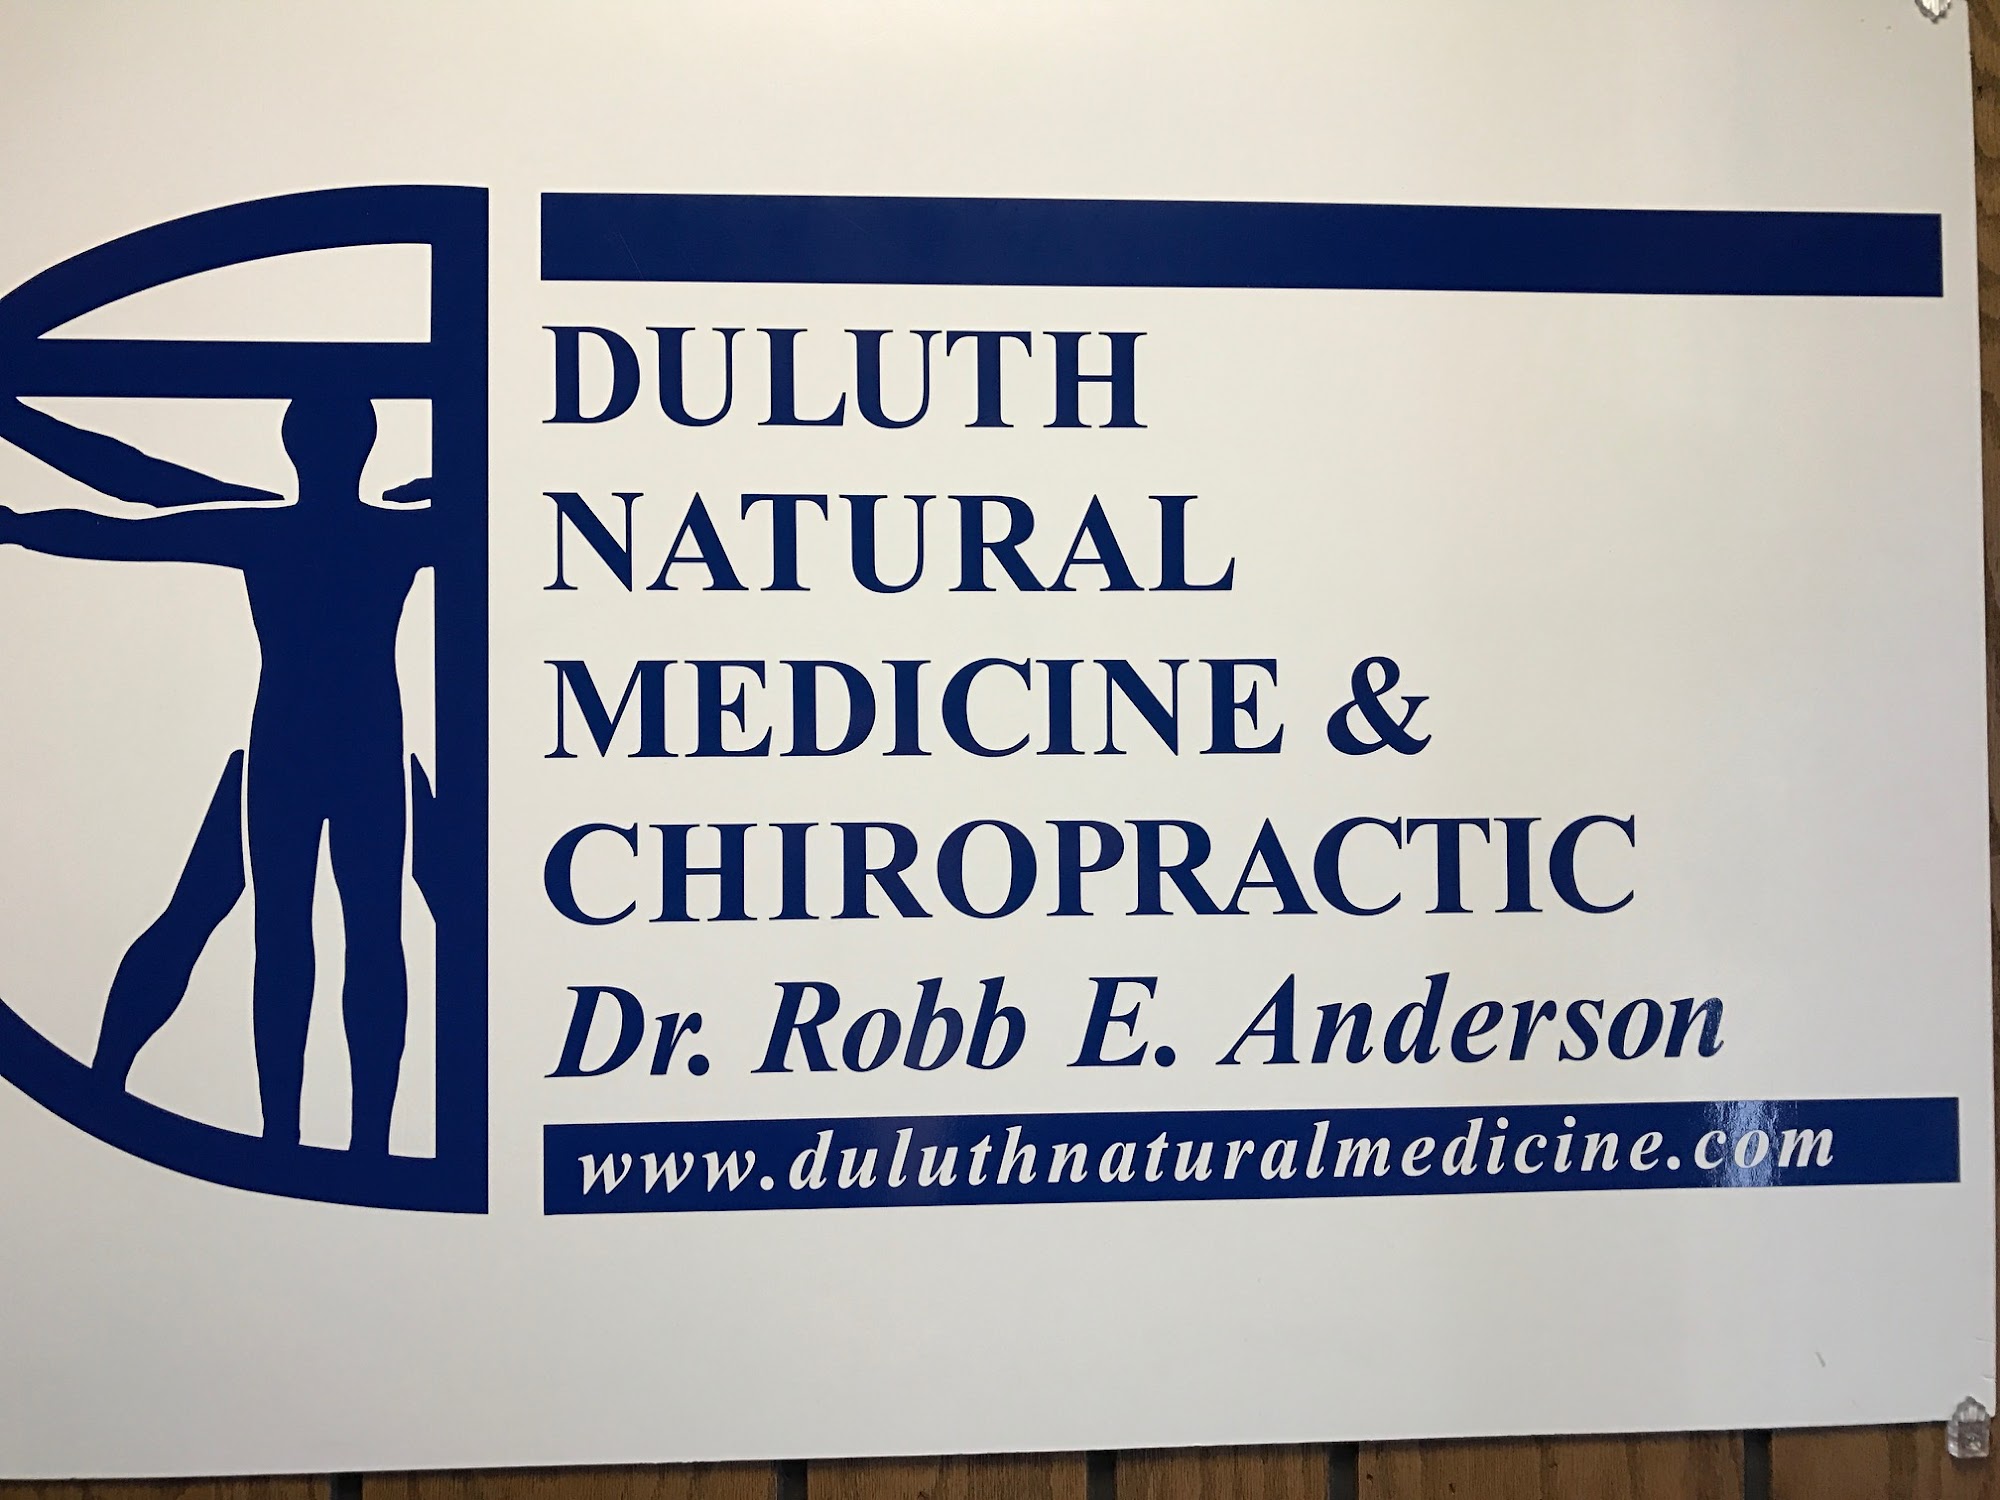 Duluth Natural Medicine & Chiropractic